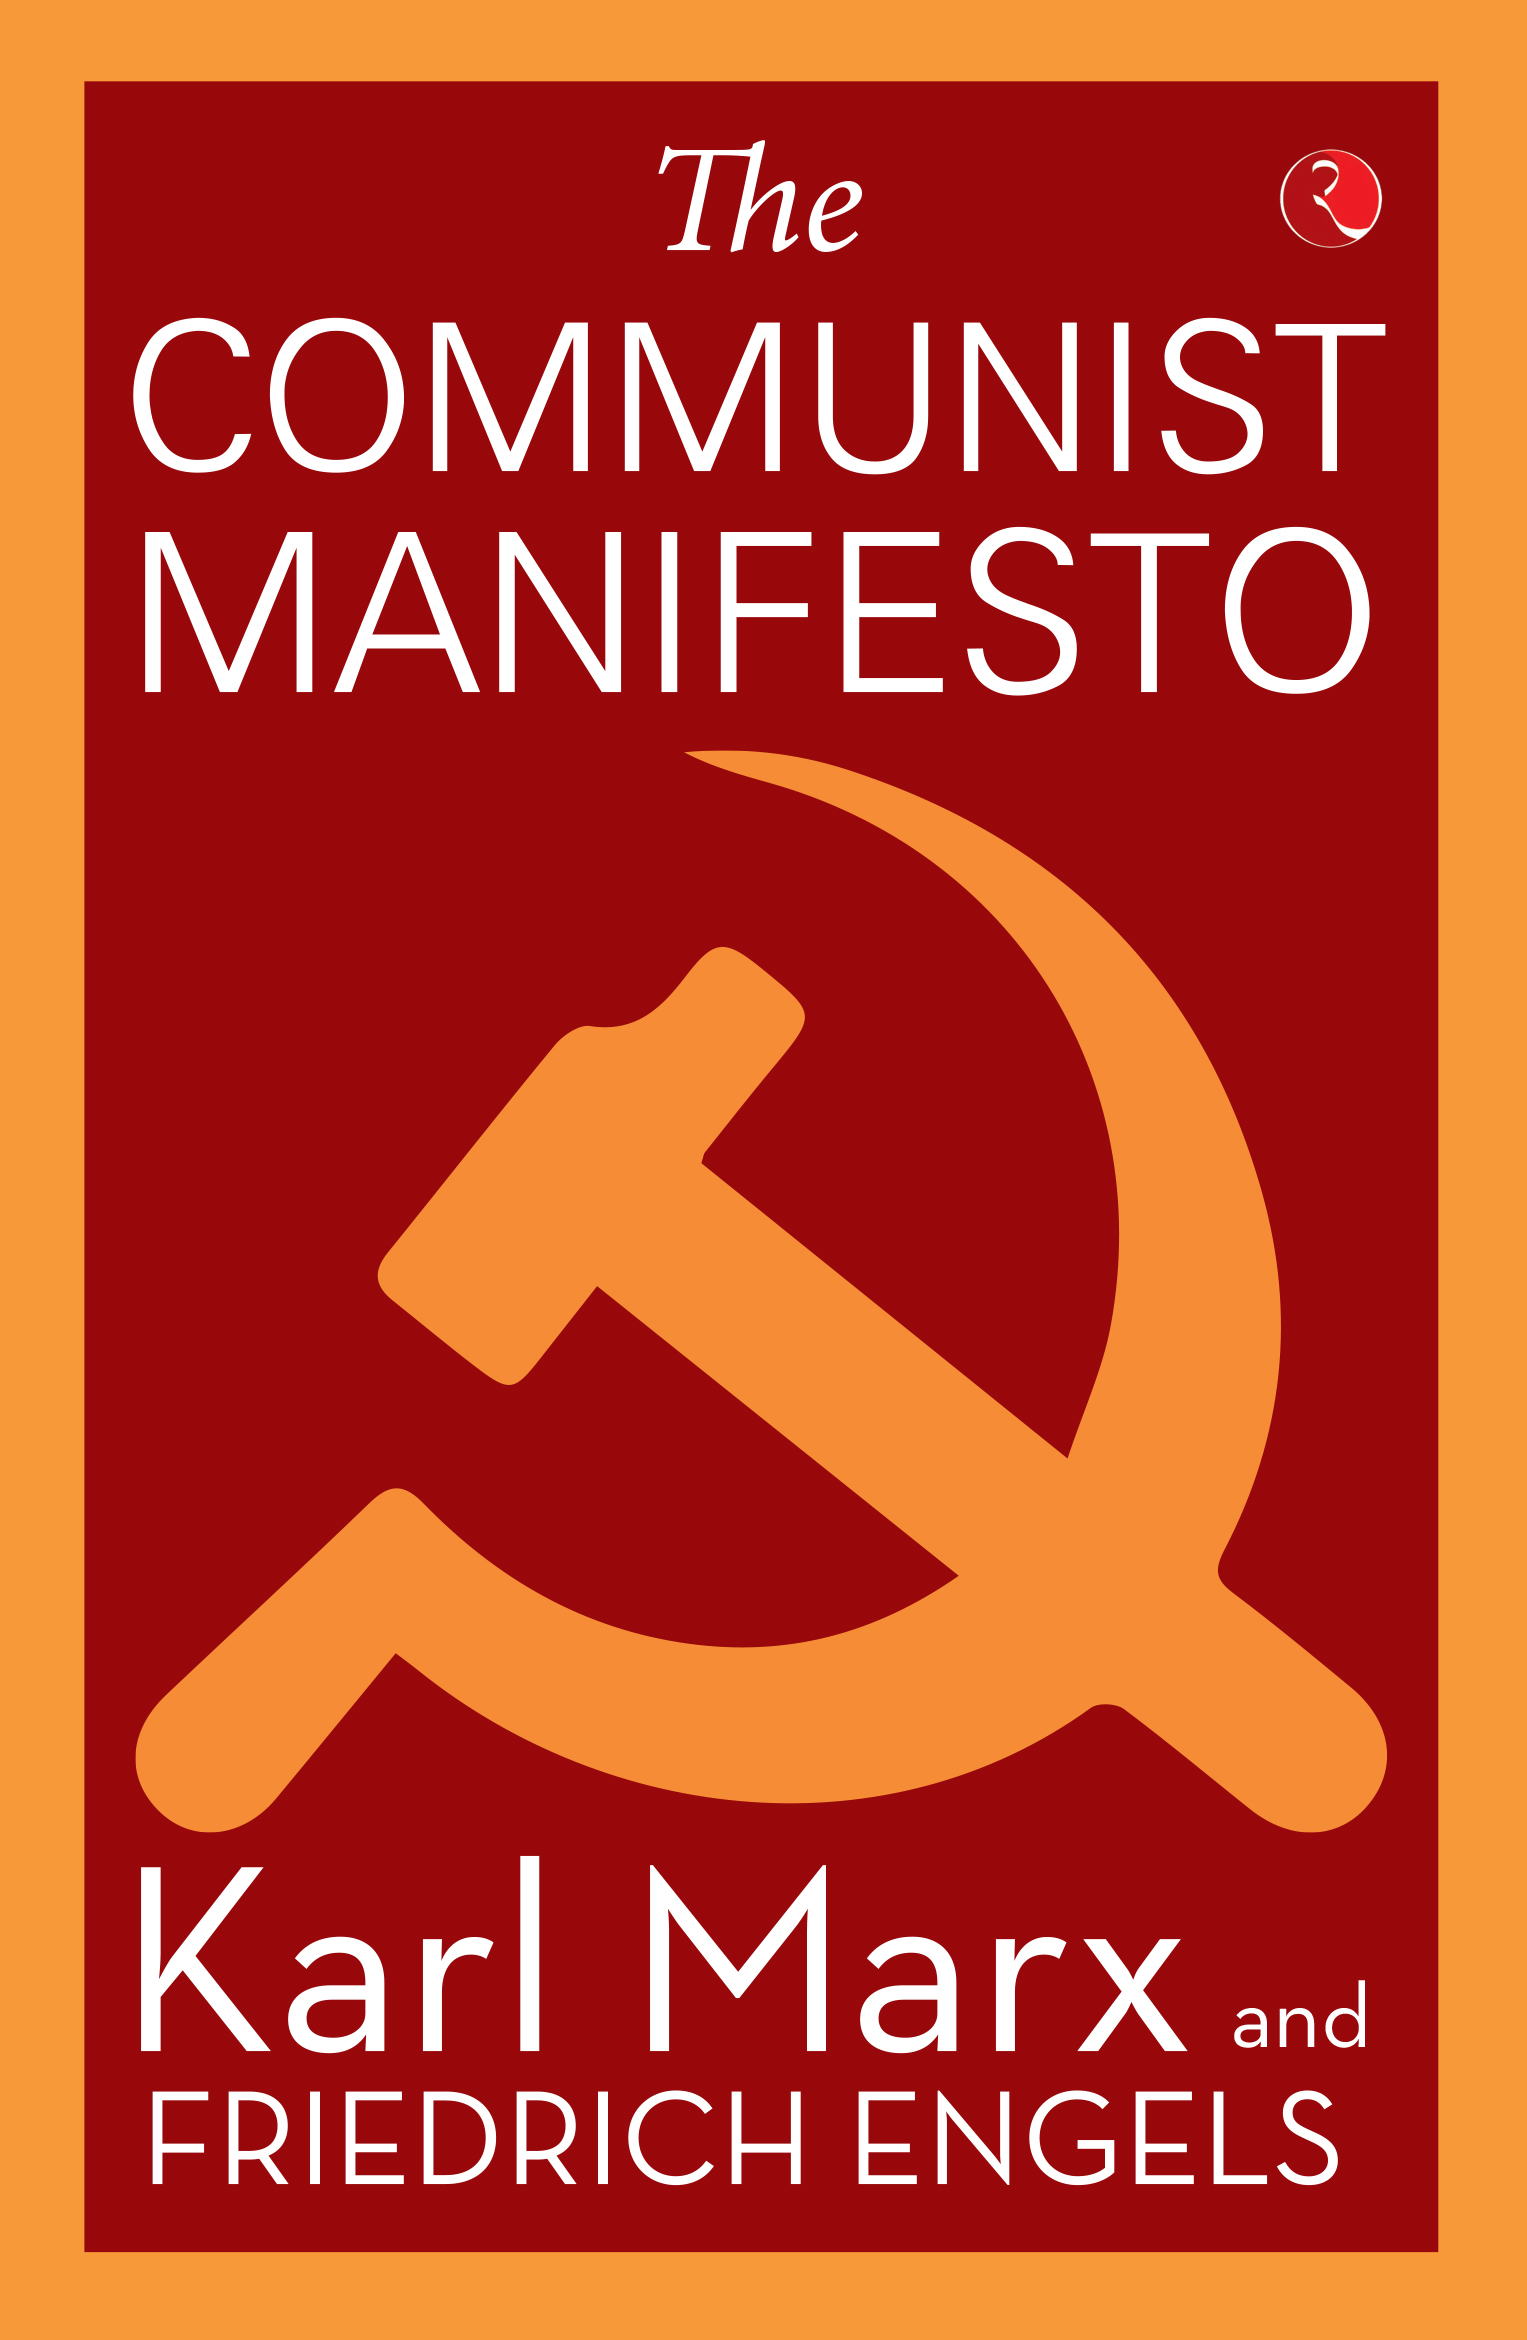 THE COMMUNIST MANIFESTO | Rupa Publications